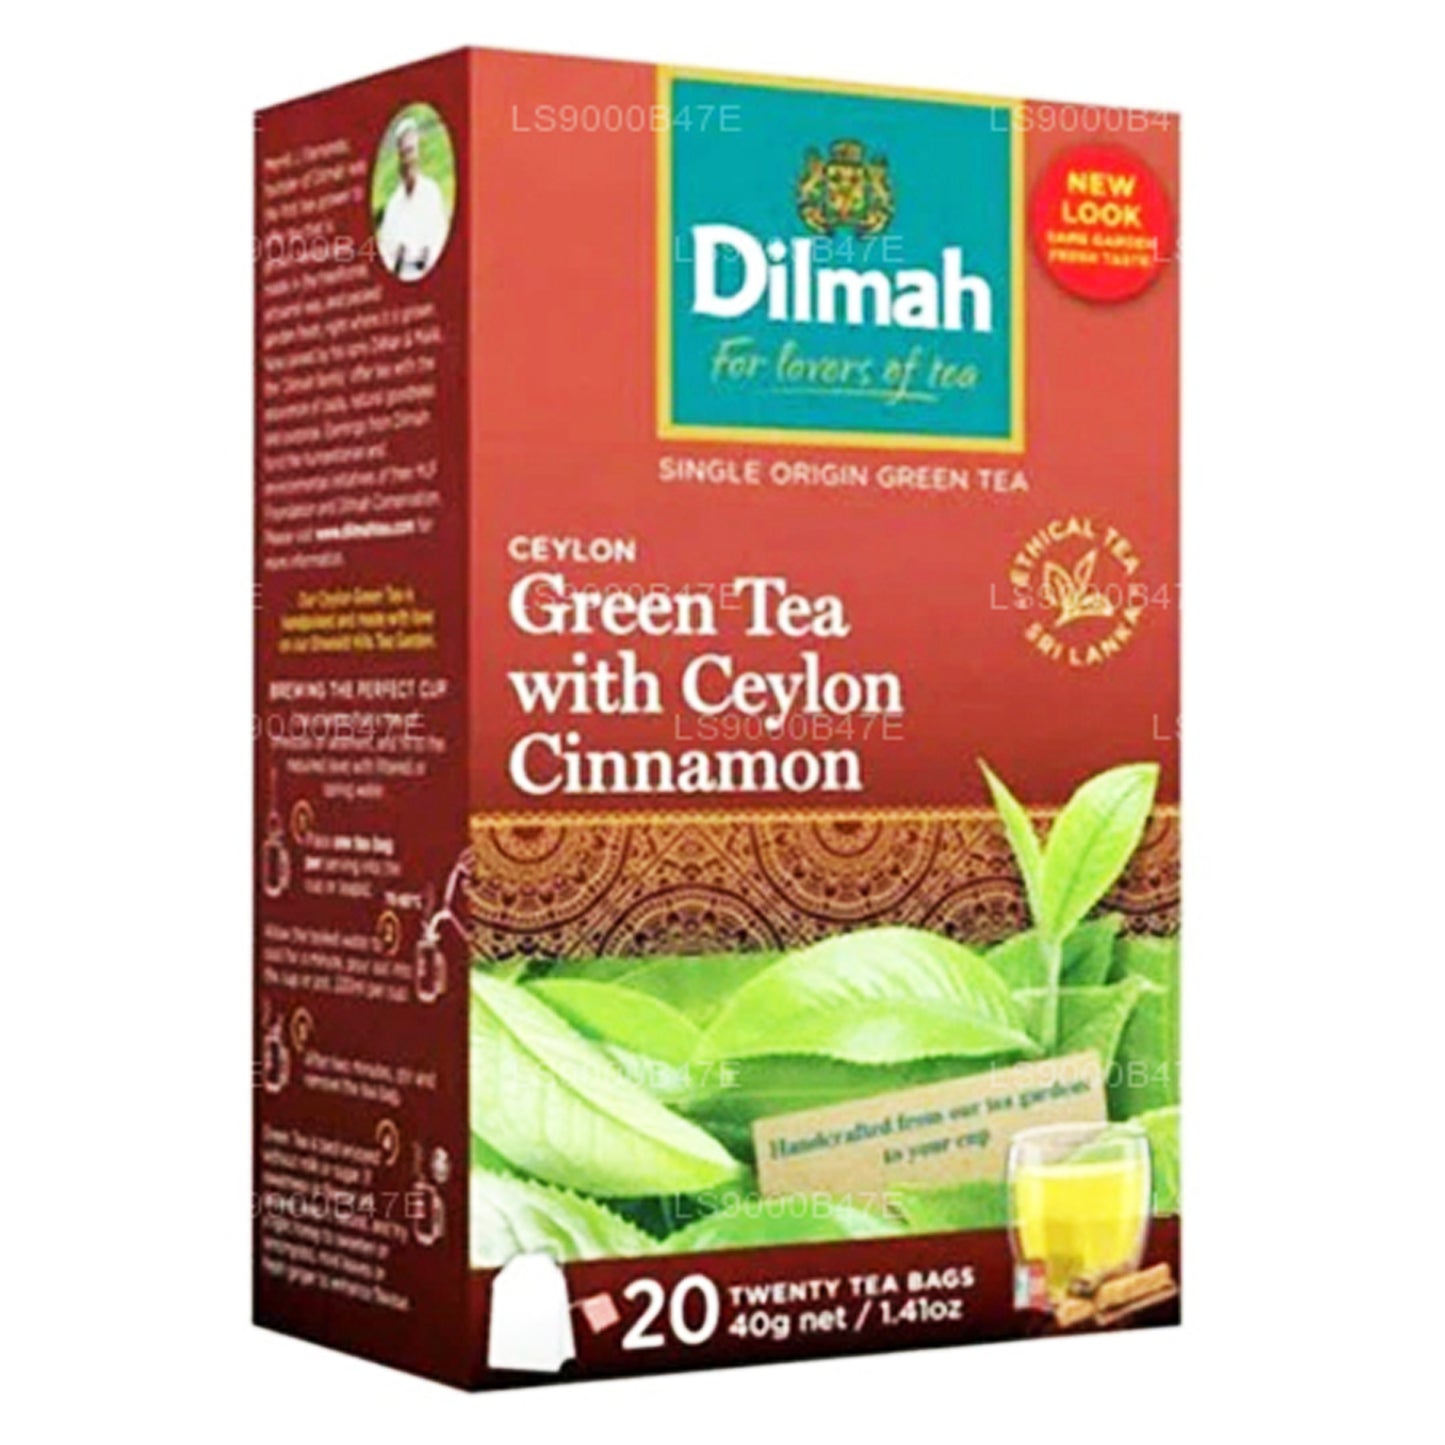 Dilmah Ceylon Green Tea with Ceylon Cinnamon (40g) 20 Tea Bags